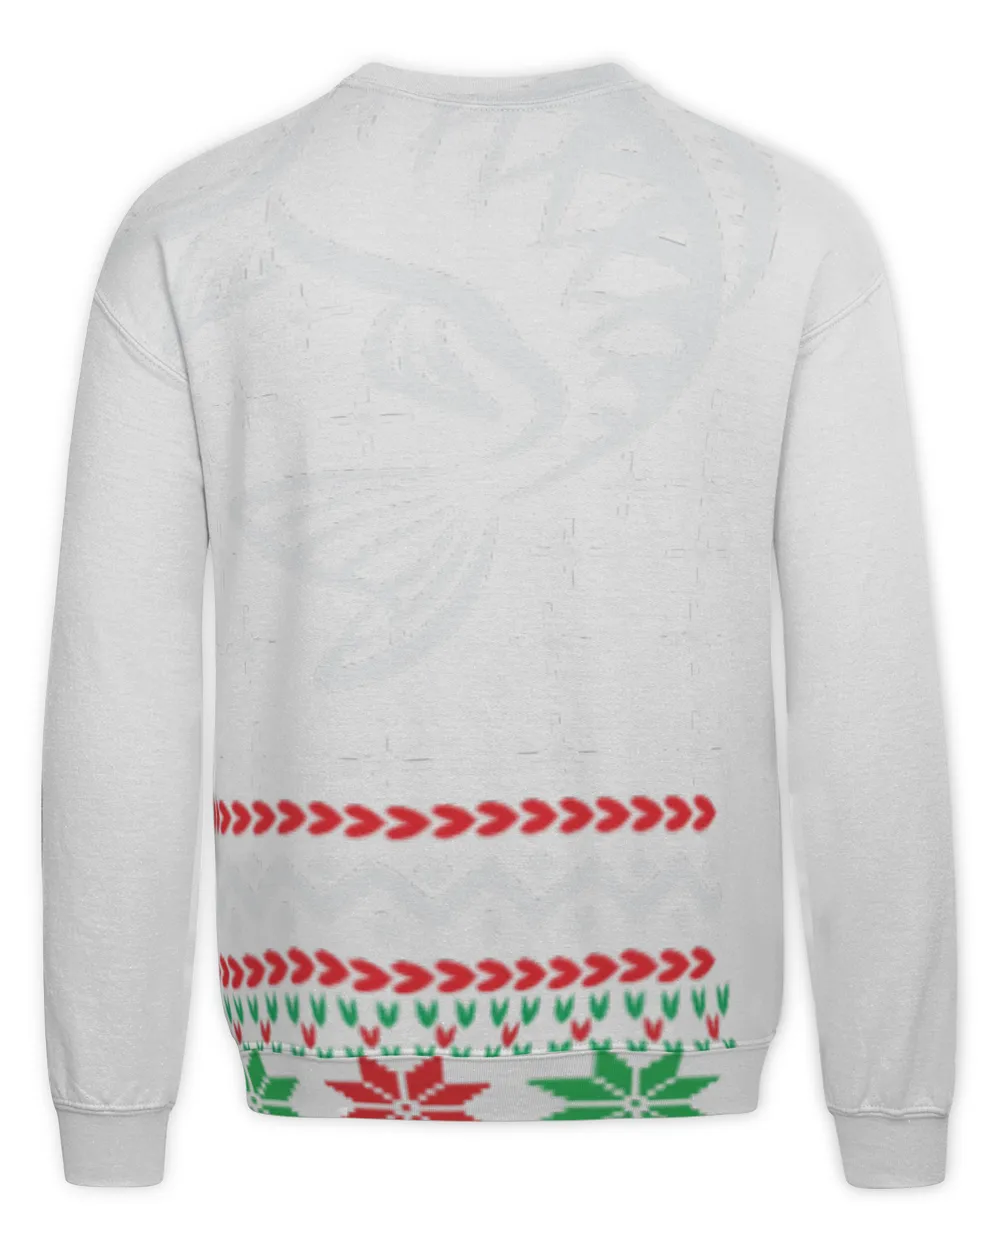 Fishing ugly Christmas sweater